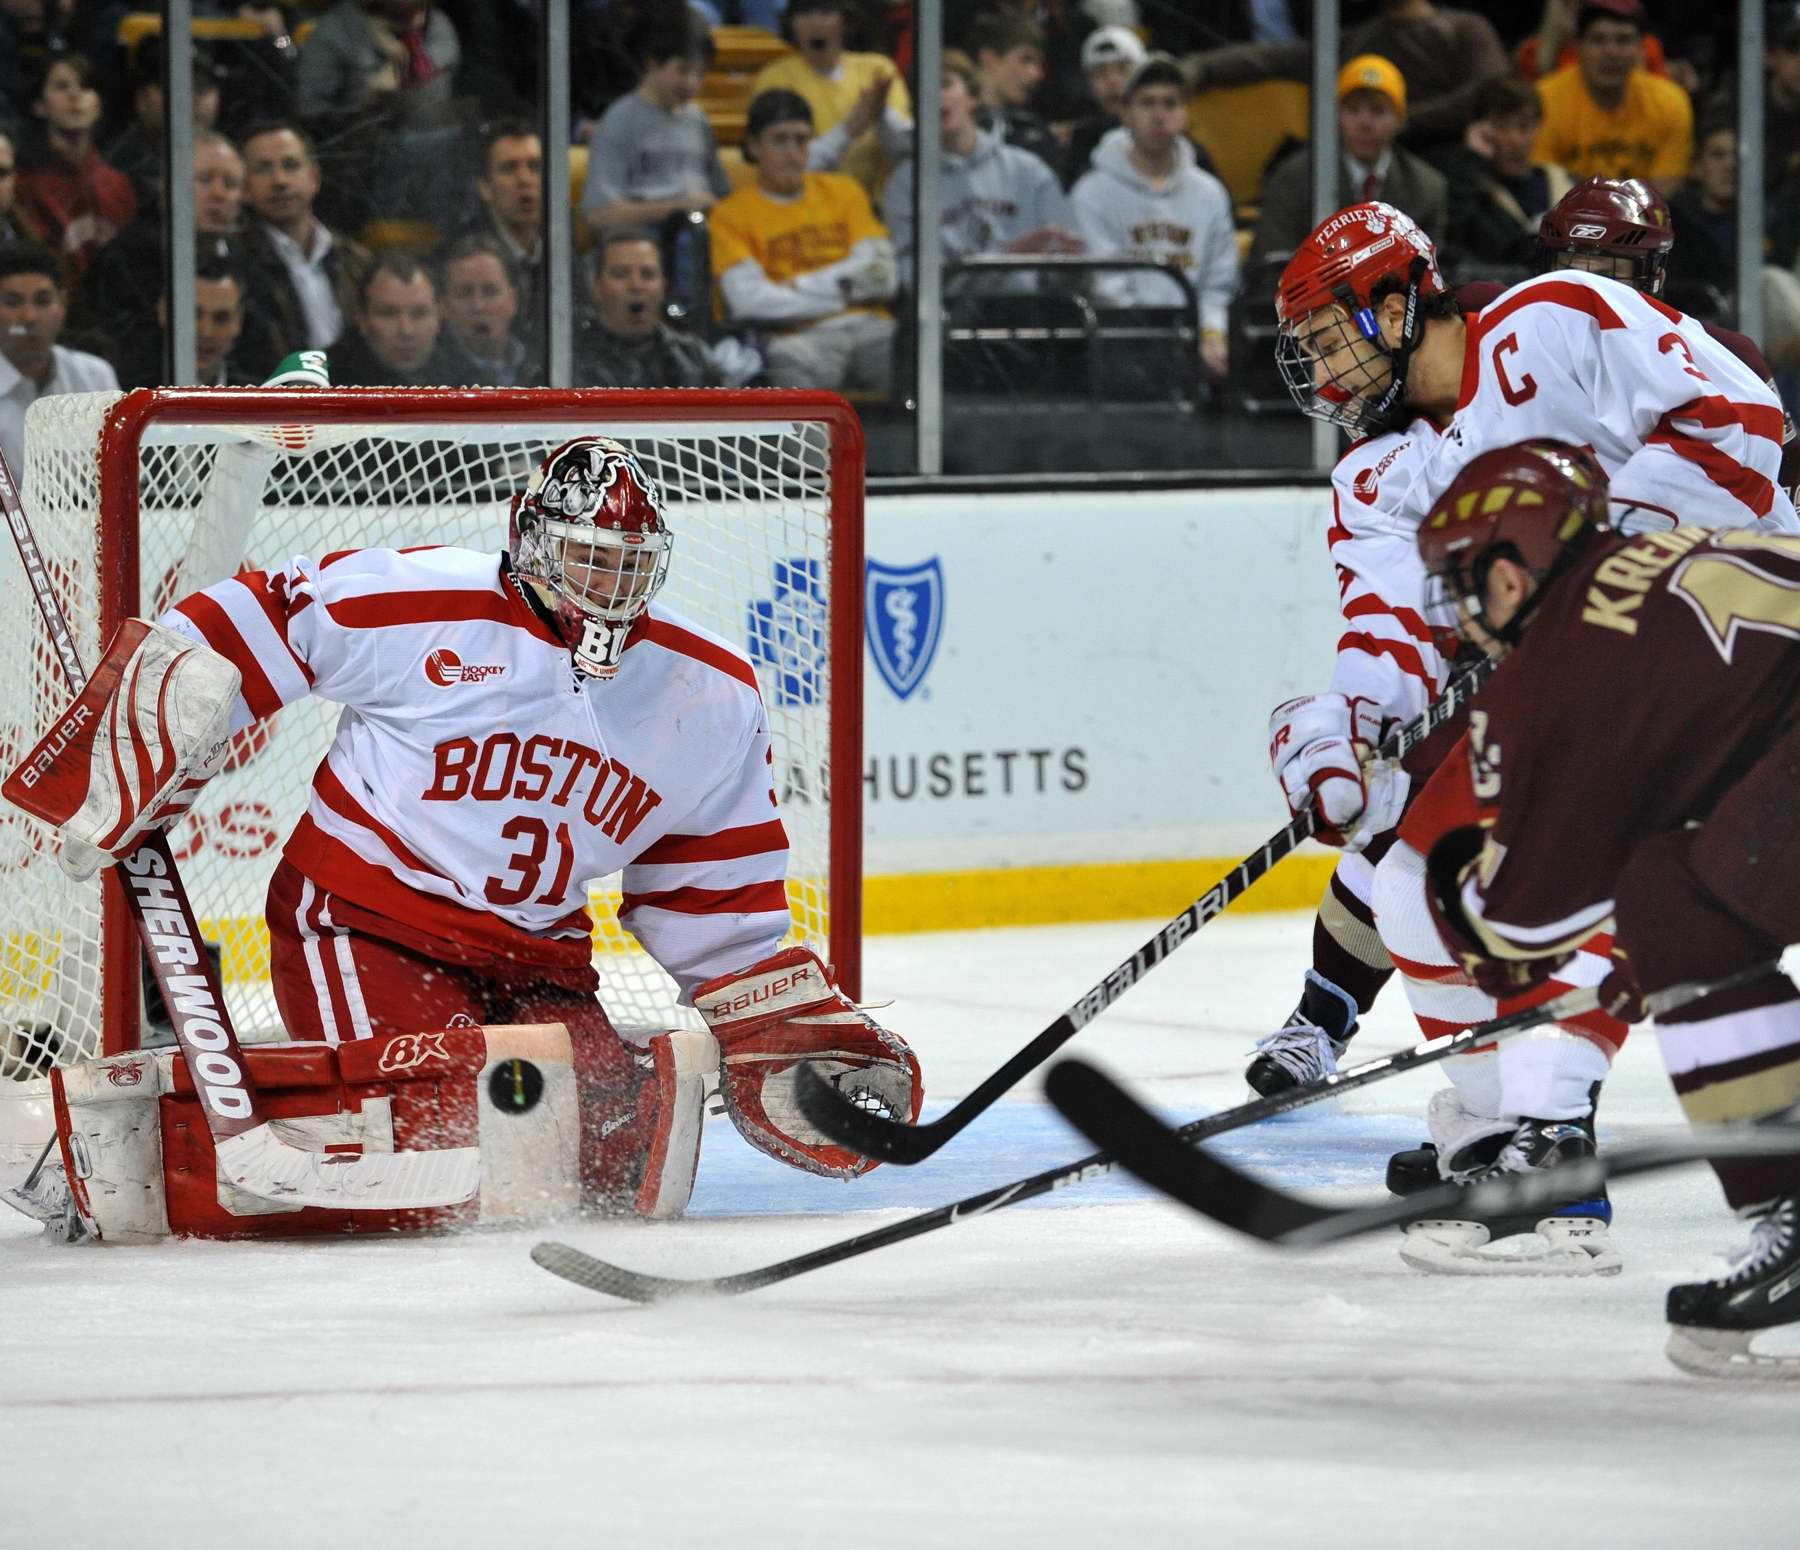 Boston Universitys Hockey goalie defends the goal from Boston College